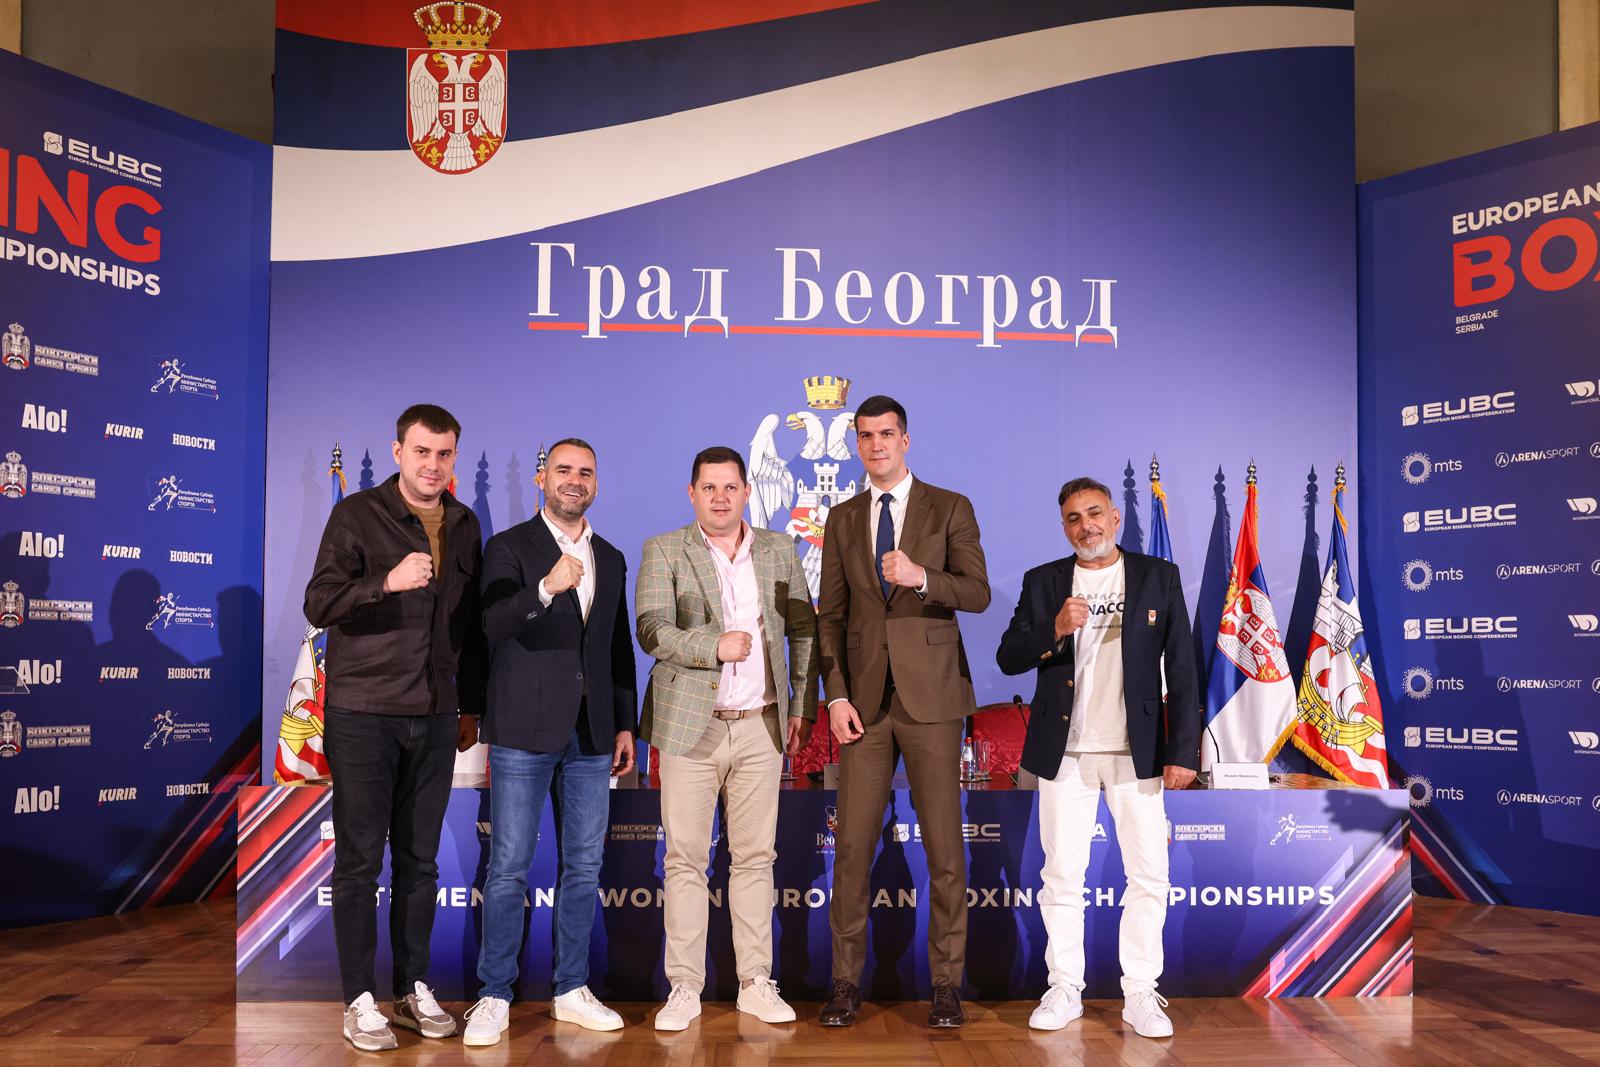 Press Conference was held in Belgrade City Hall